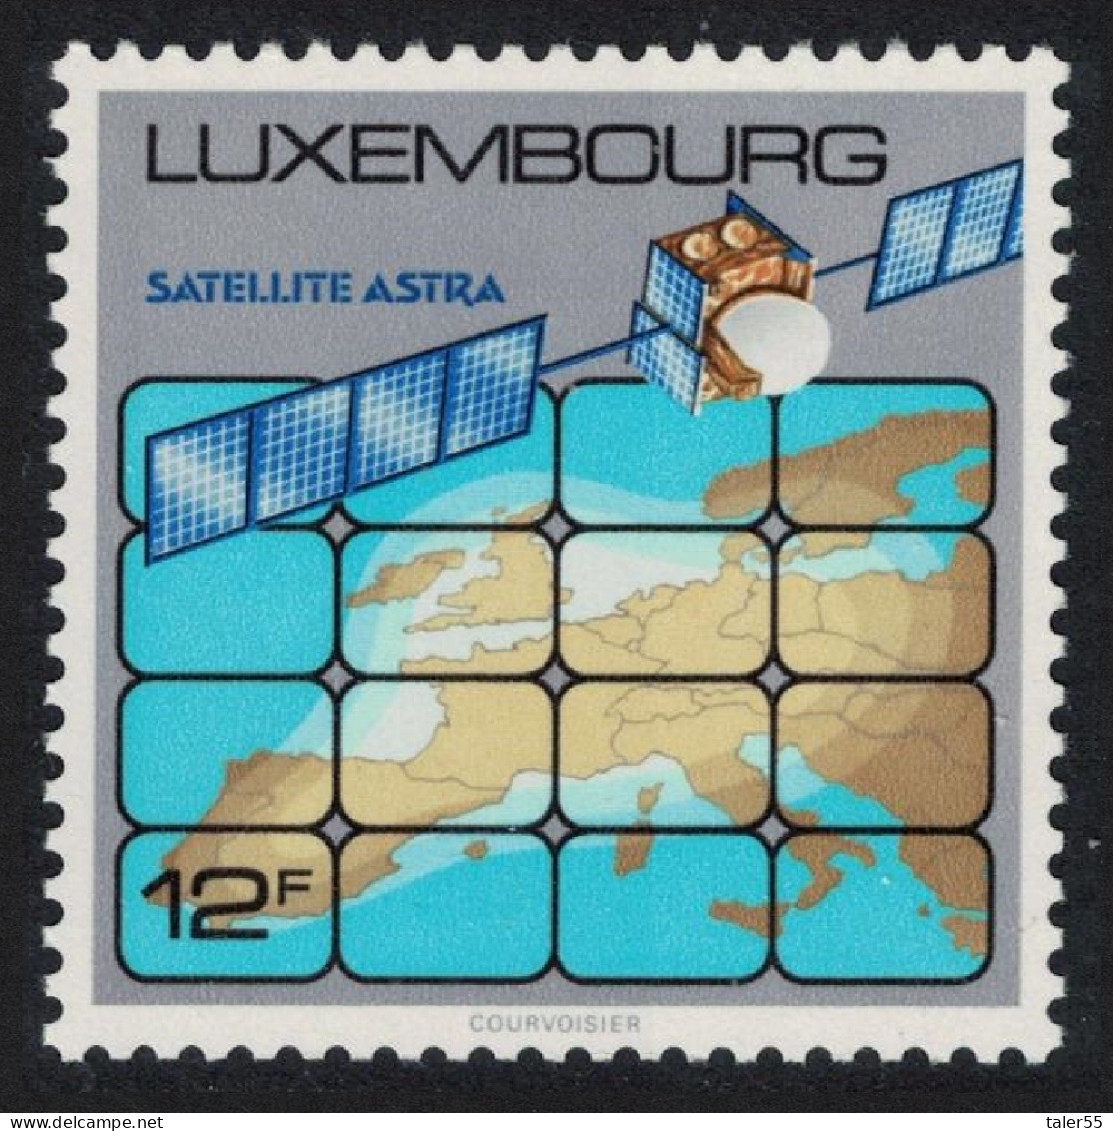 Luxembourg Launch Of 16-channel TV Satellite 1989 MNH SG#1245 MI#1218 - Nuovi